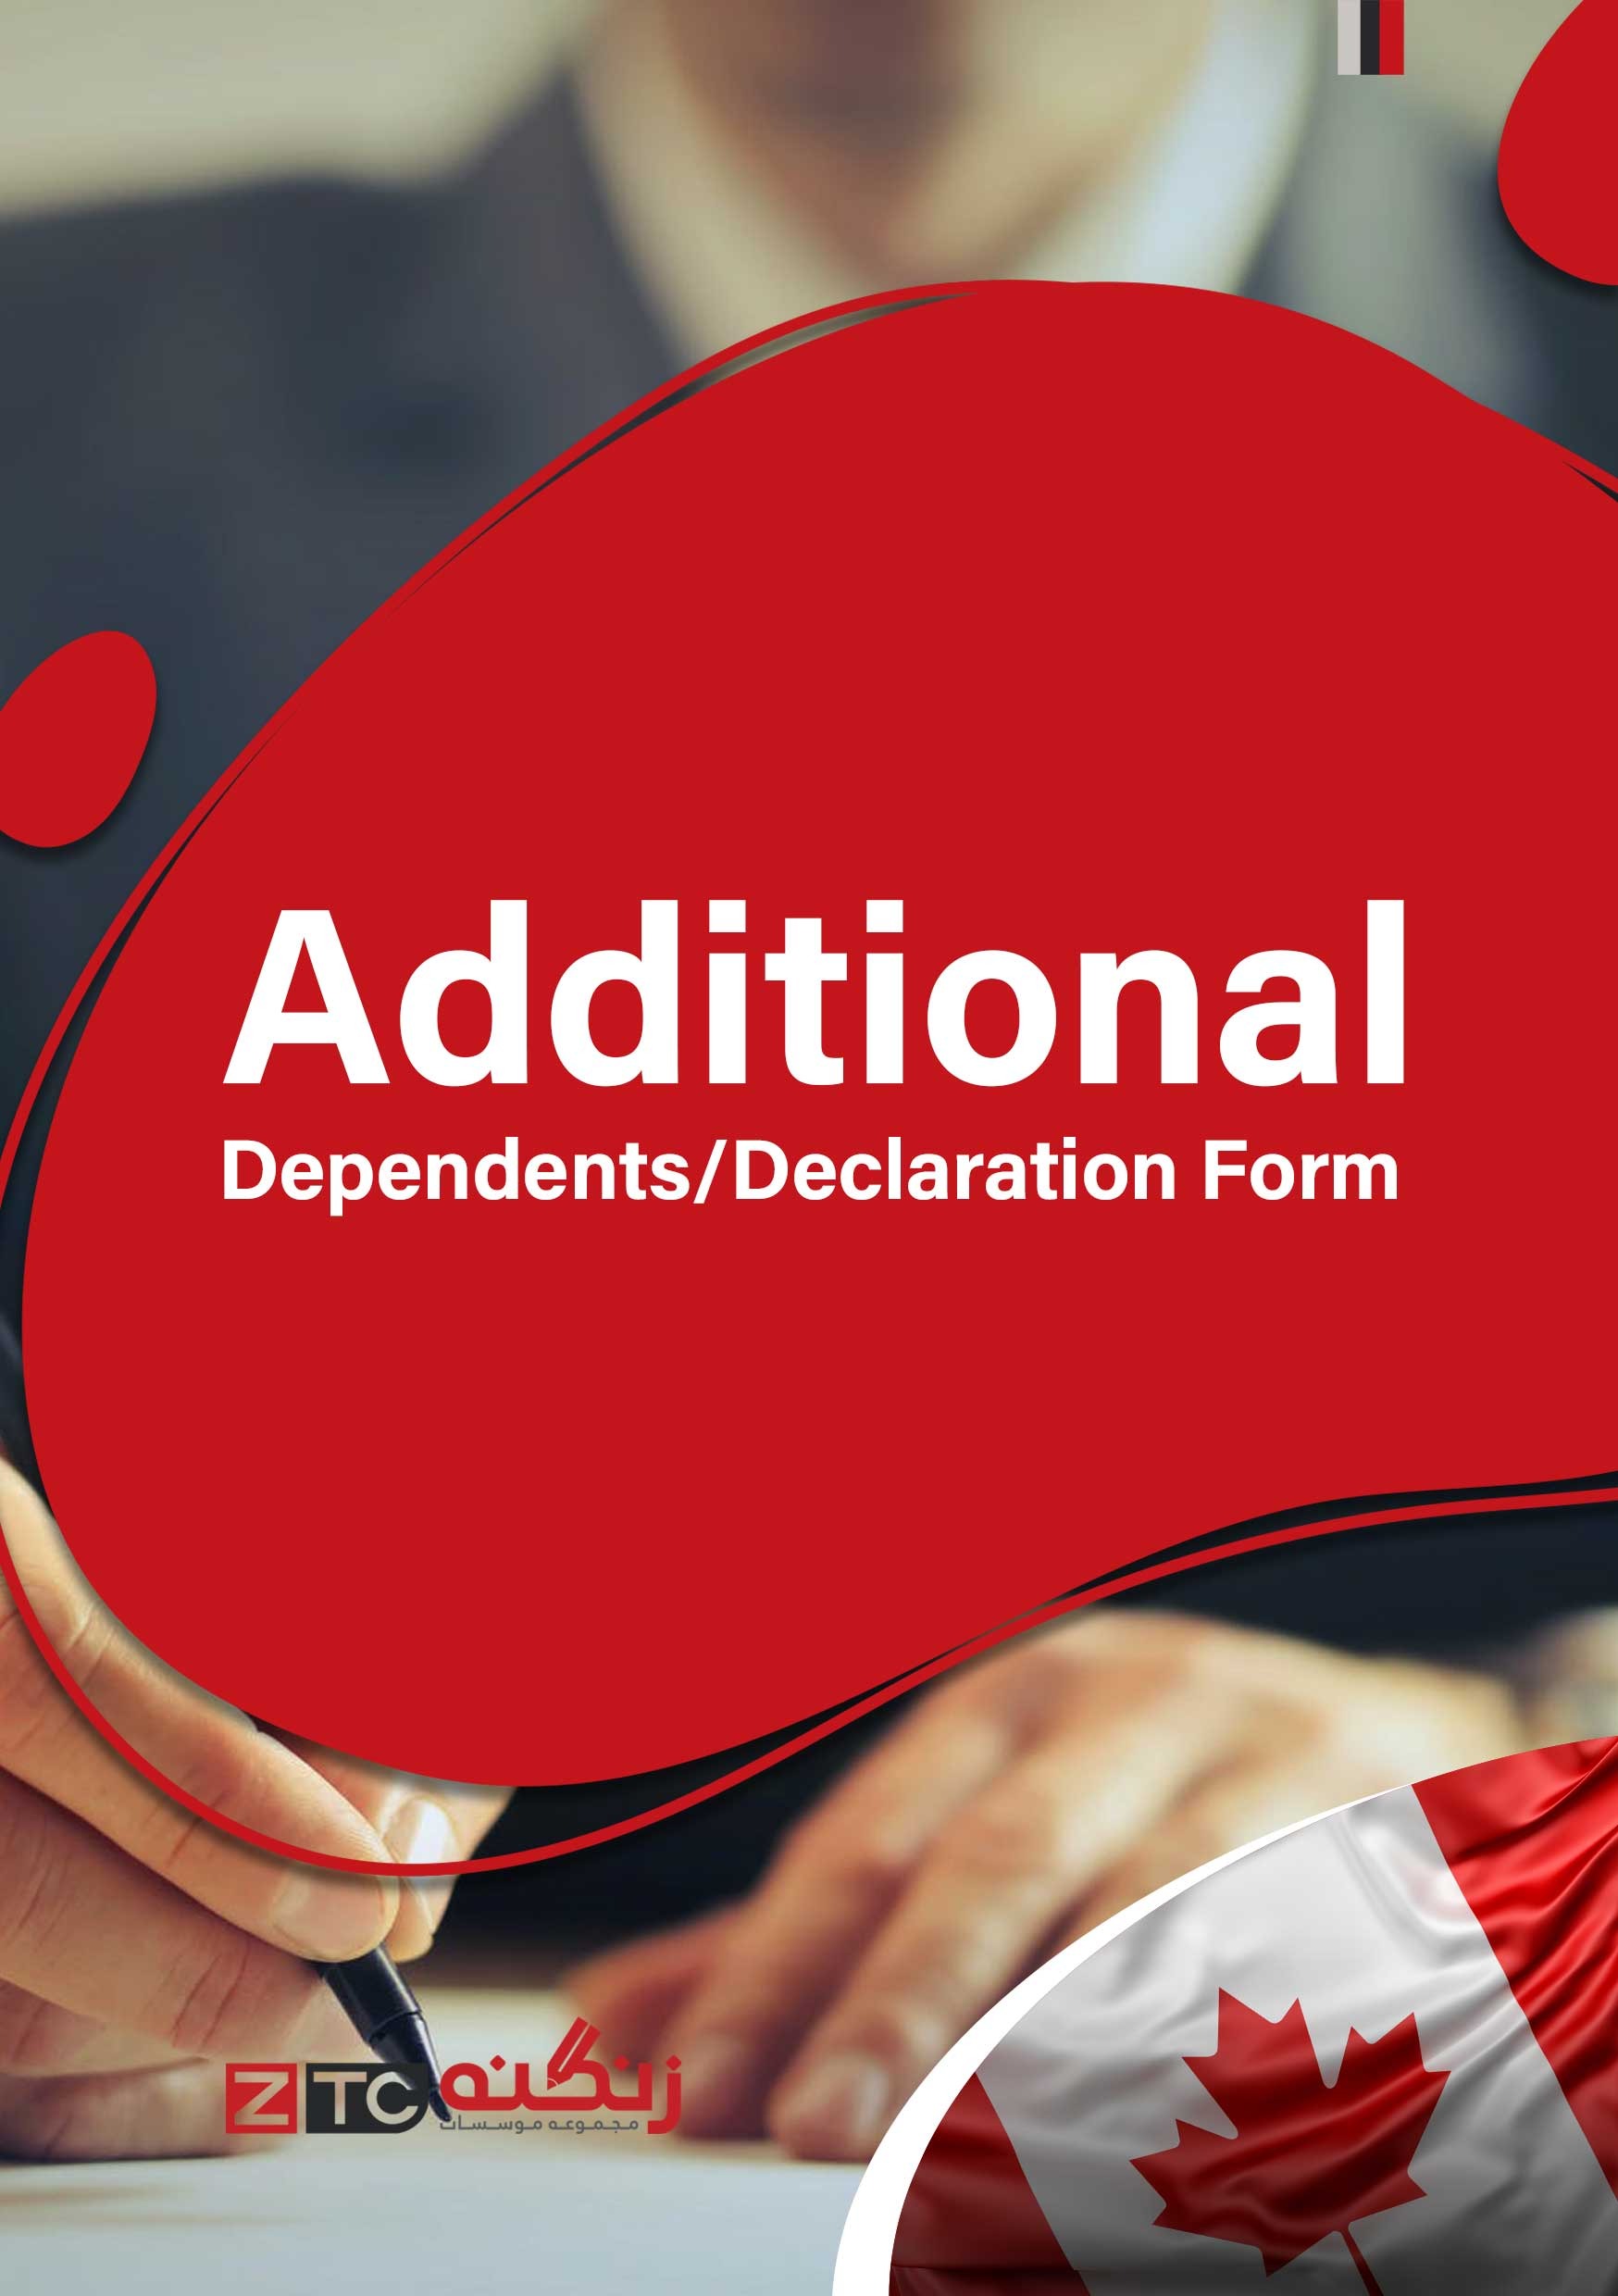 Additional Dependents - Declaration Form